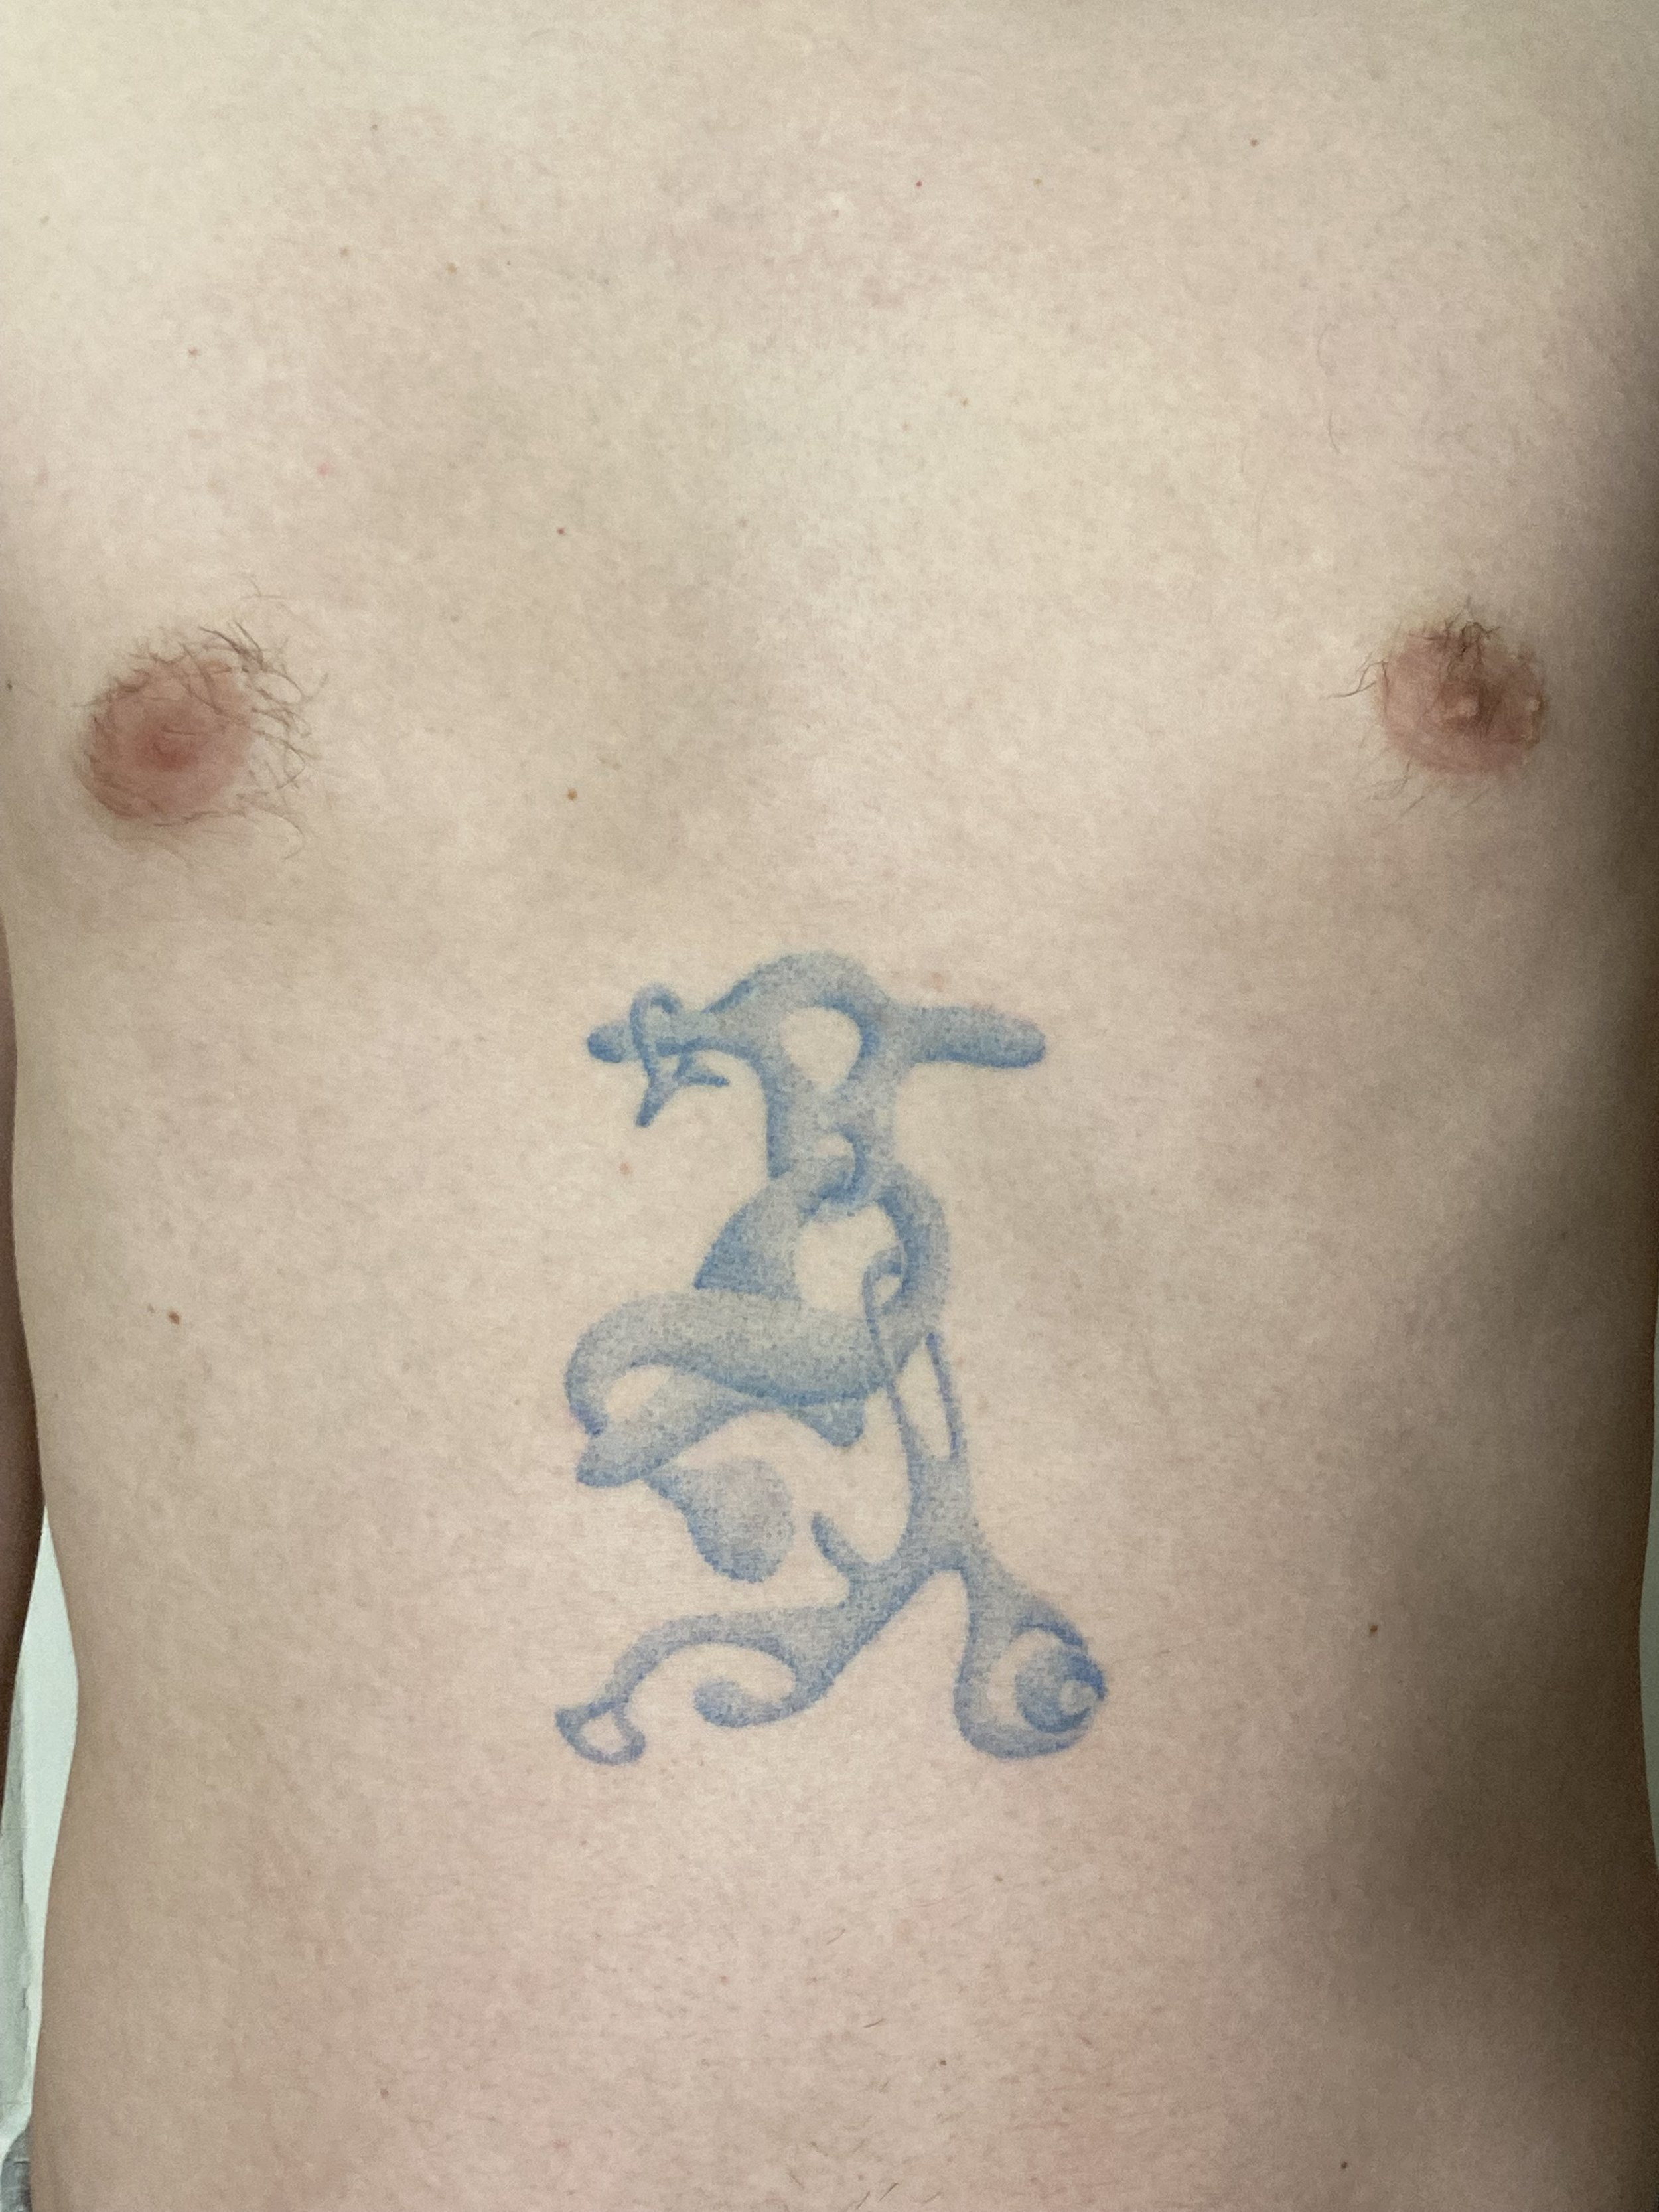 Filip polar tattoo on chest.jpeg